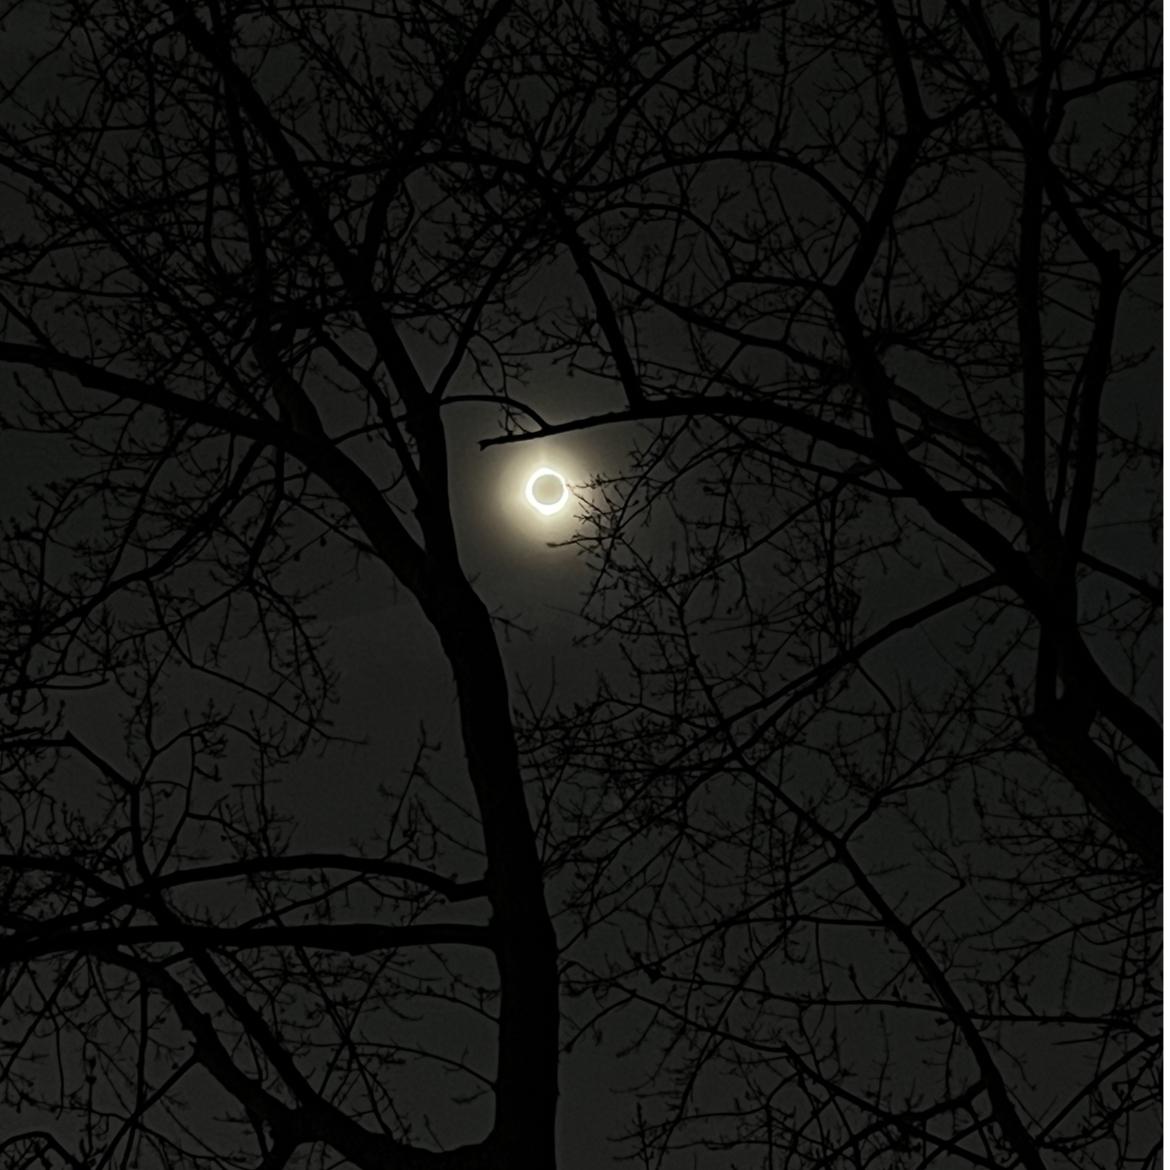 moonrise's images